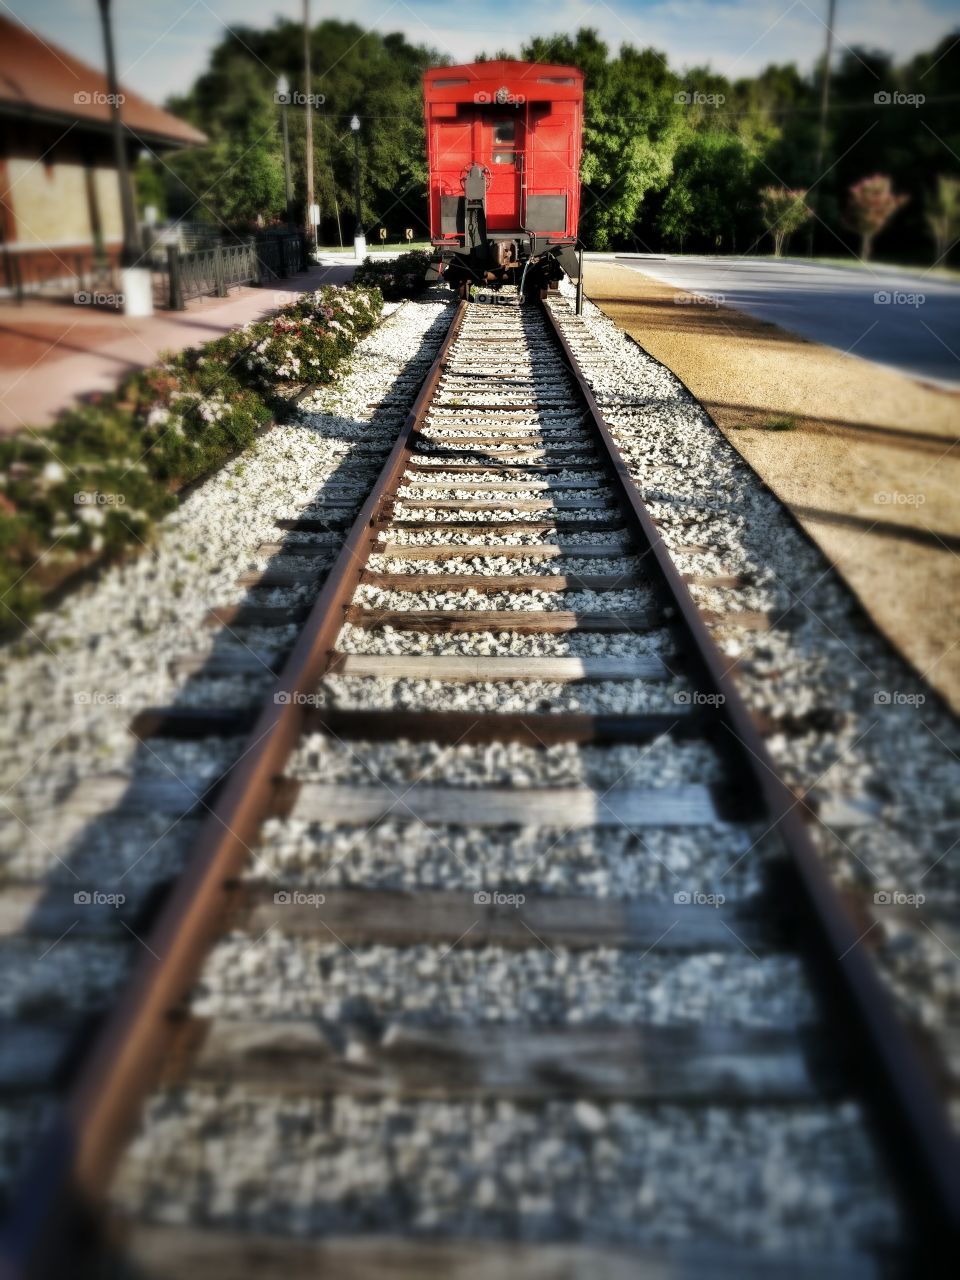 red tracks